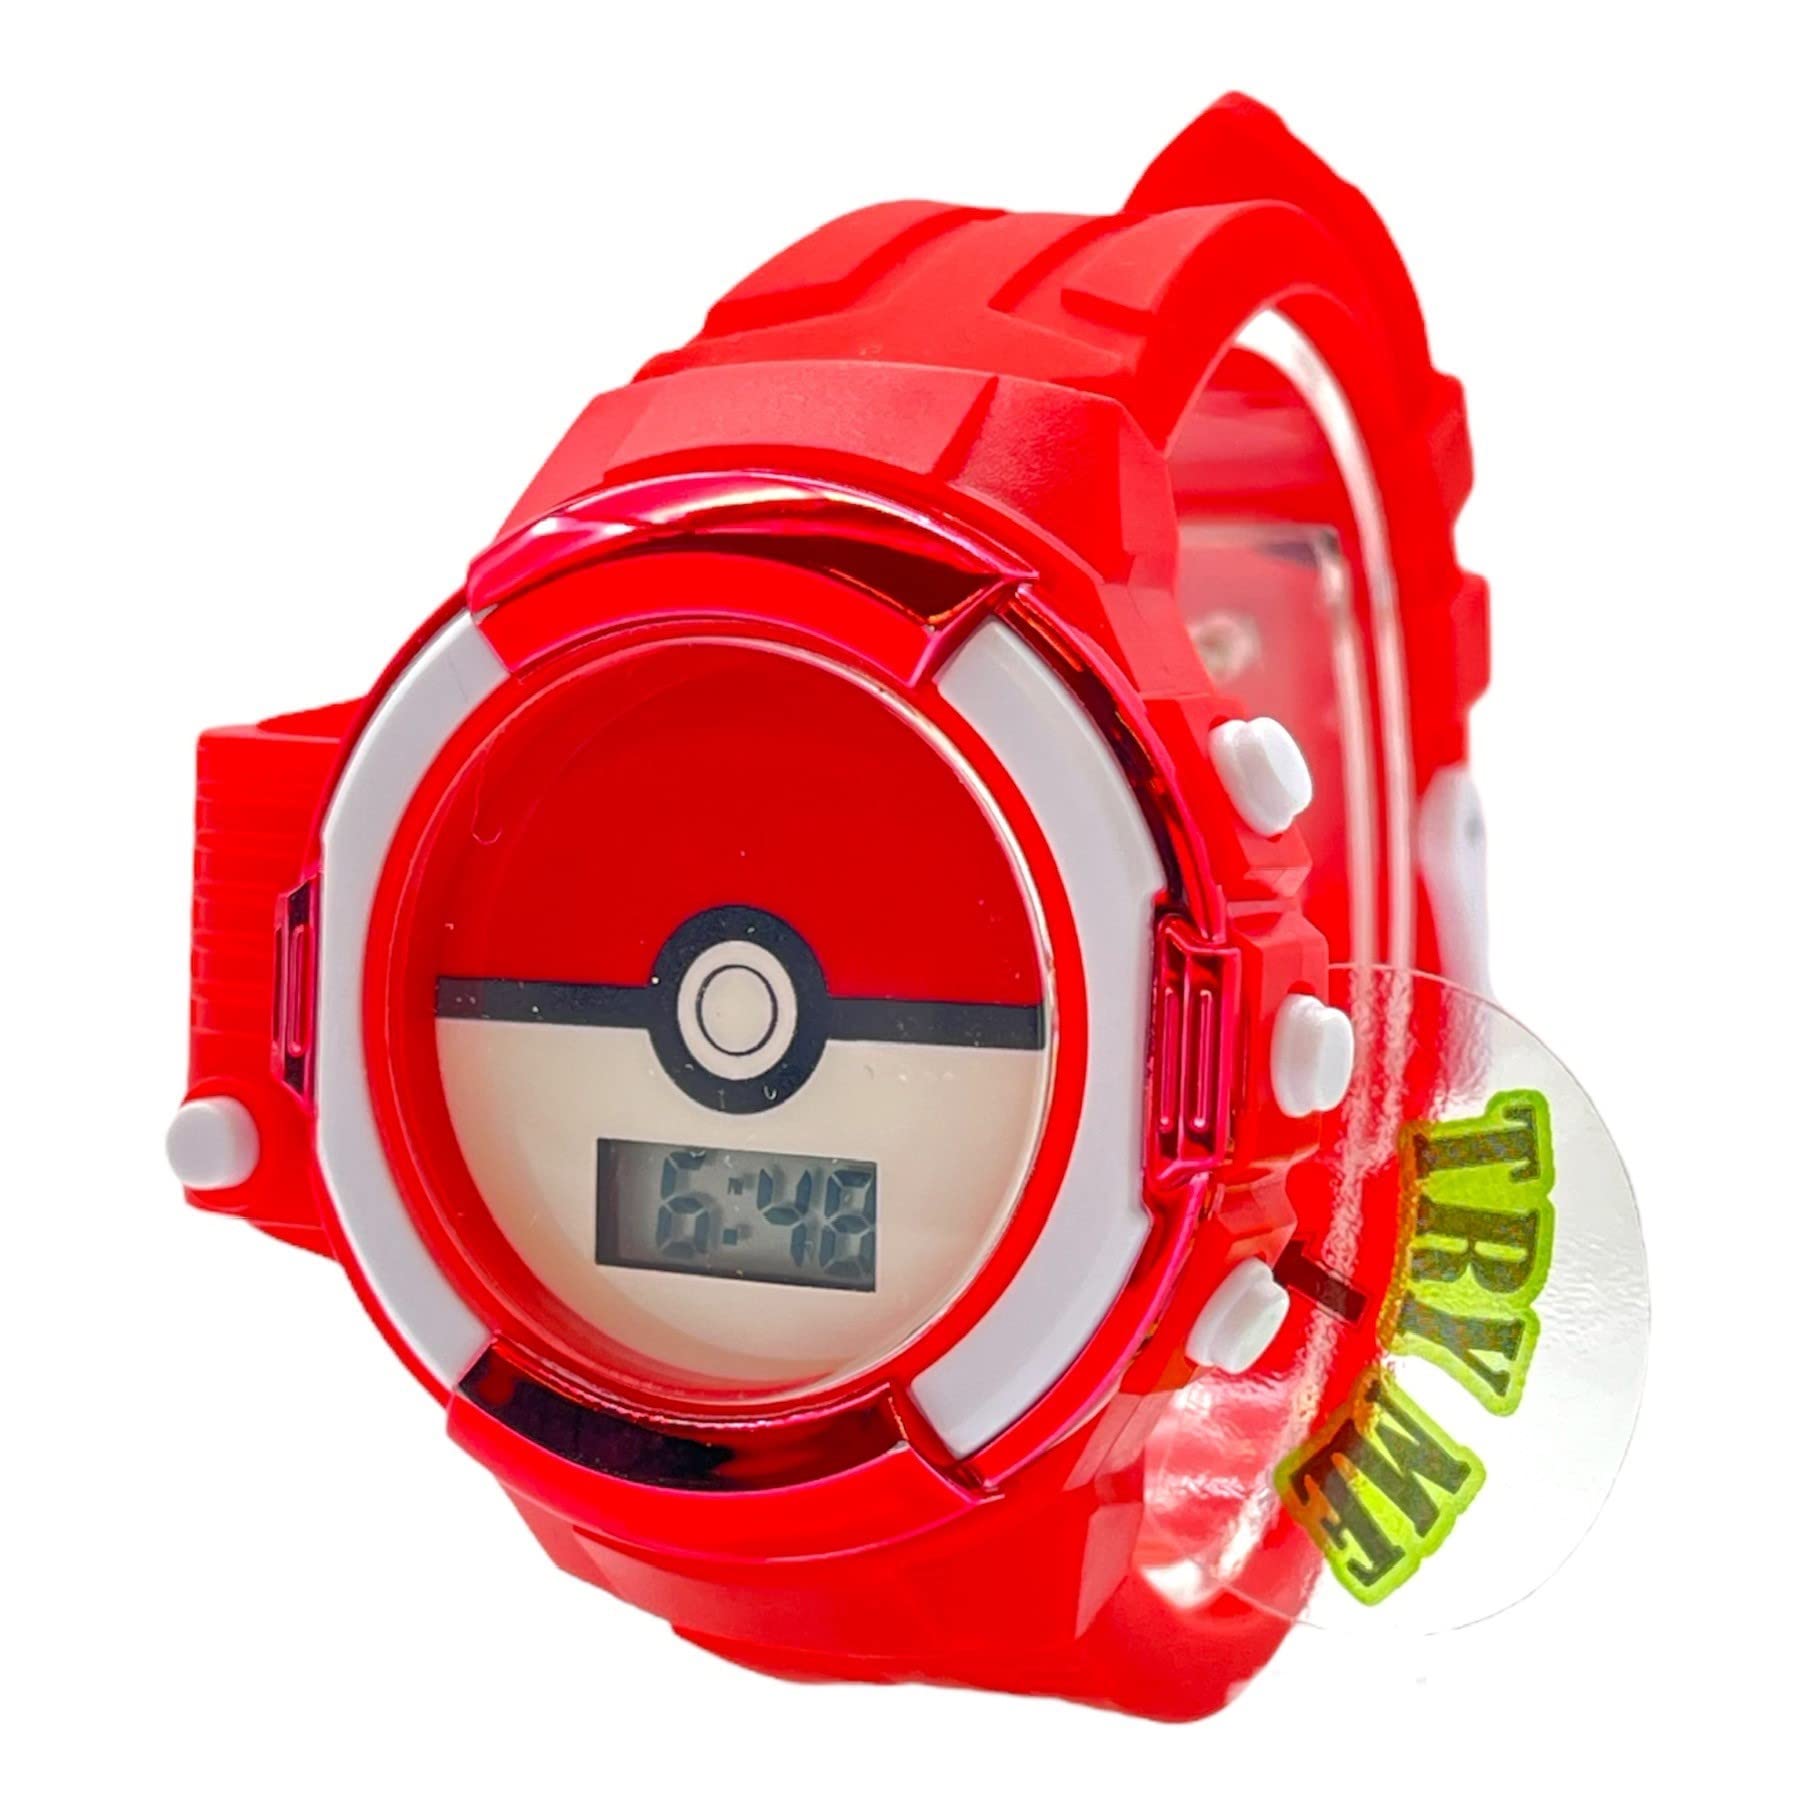 Accutime Kids Pokemon Red Pokeball Digital LCD Quartz Wrist-Watch with Flashlight and Red Strap for Boys, Girls (Model: POK4281AZ)